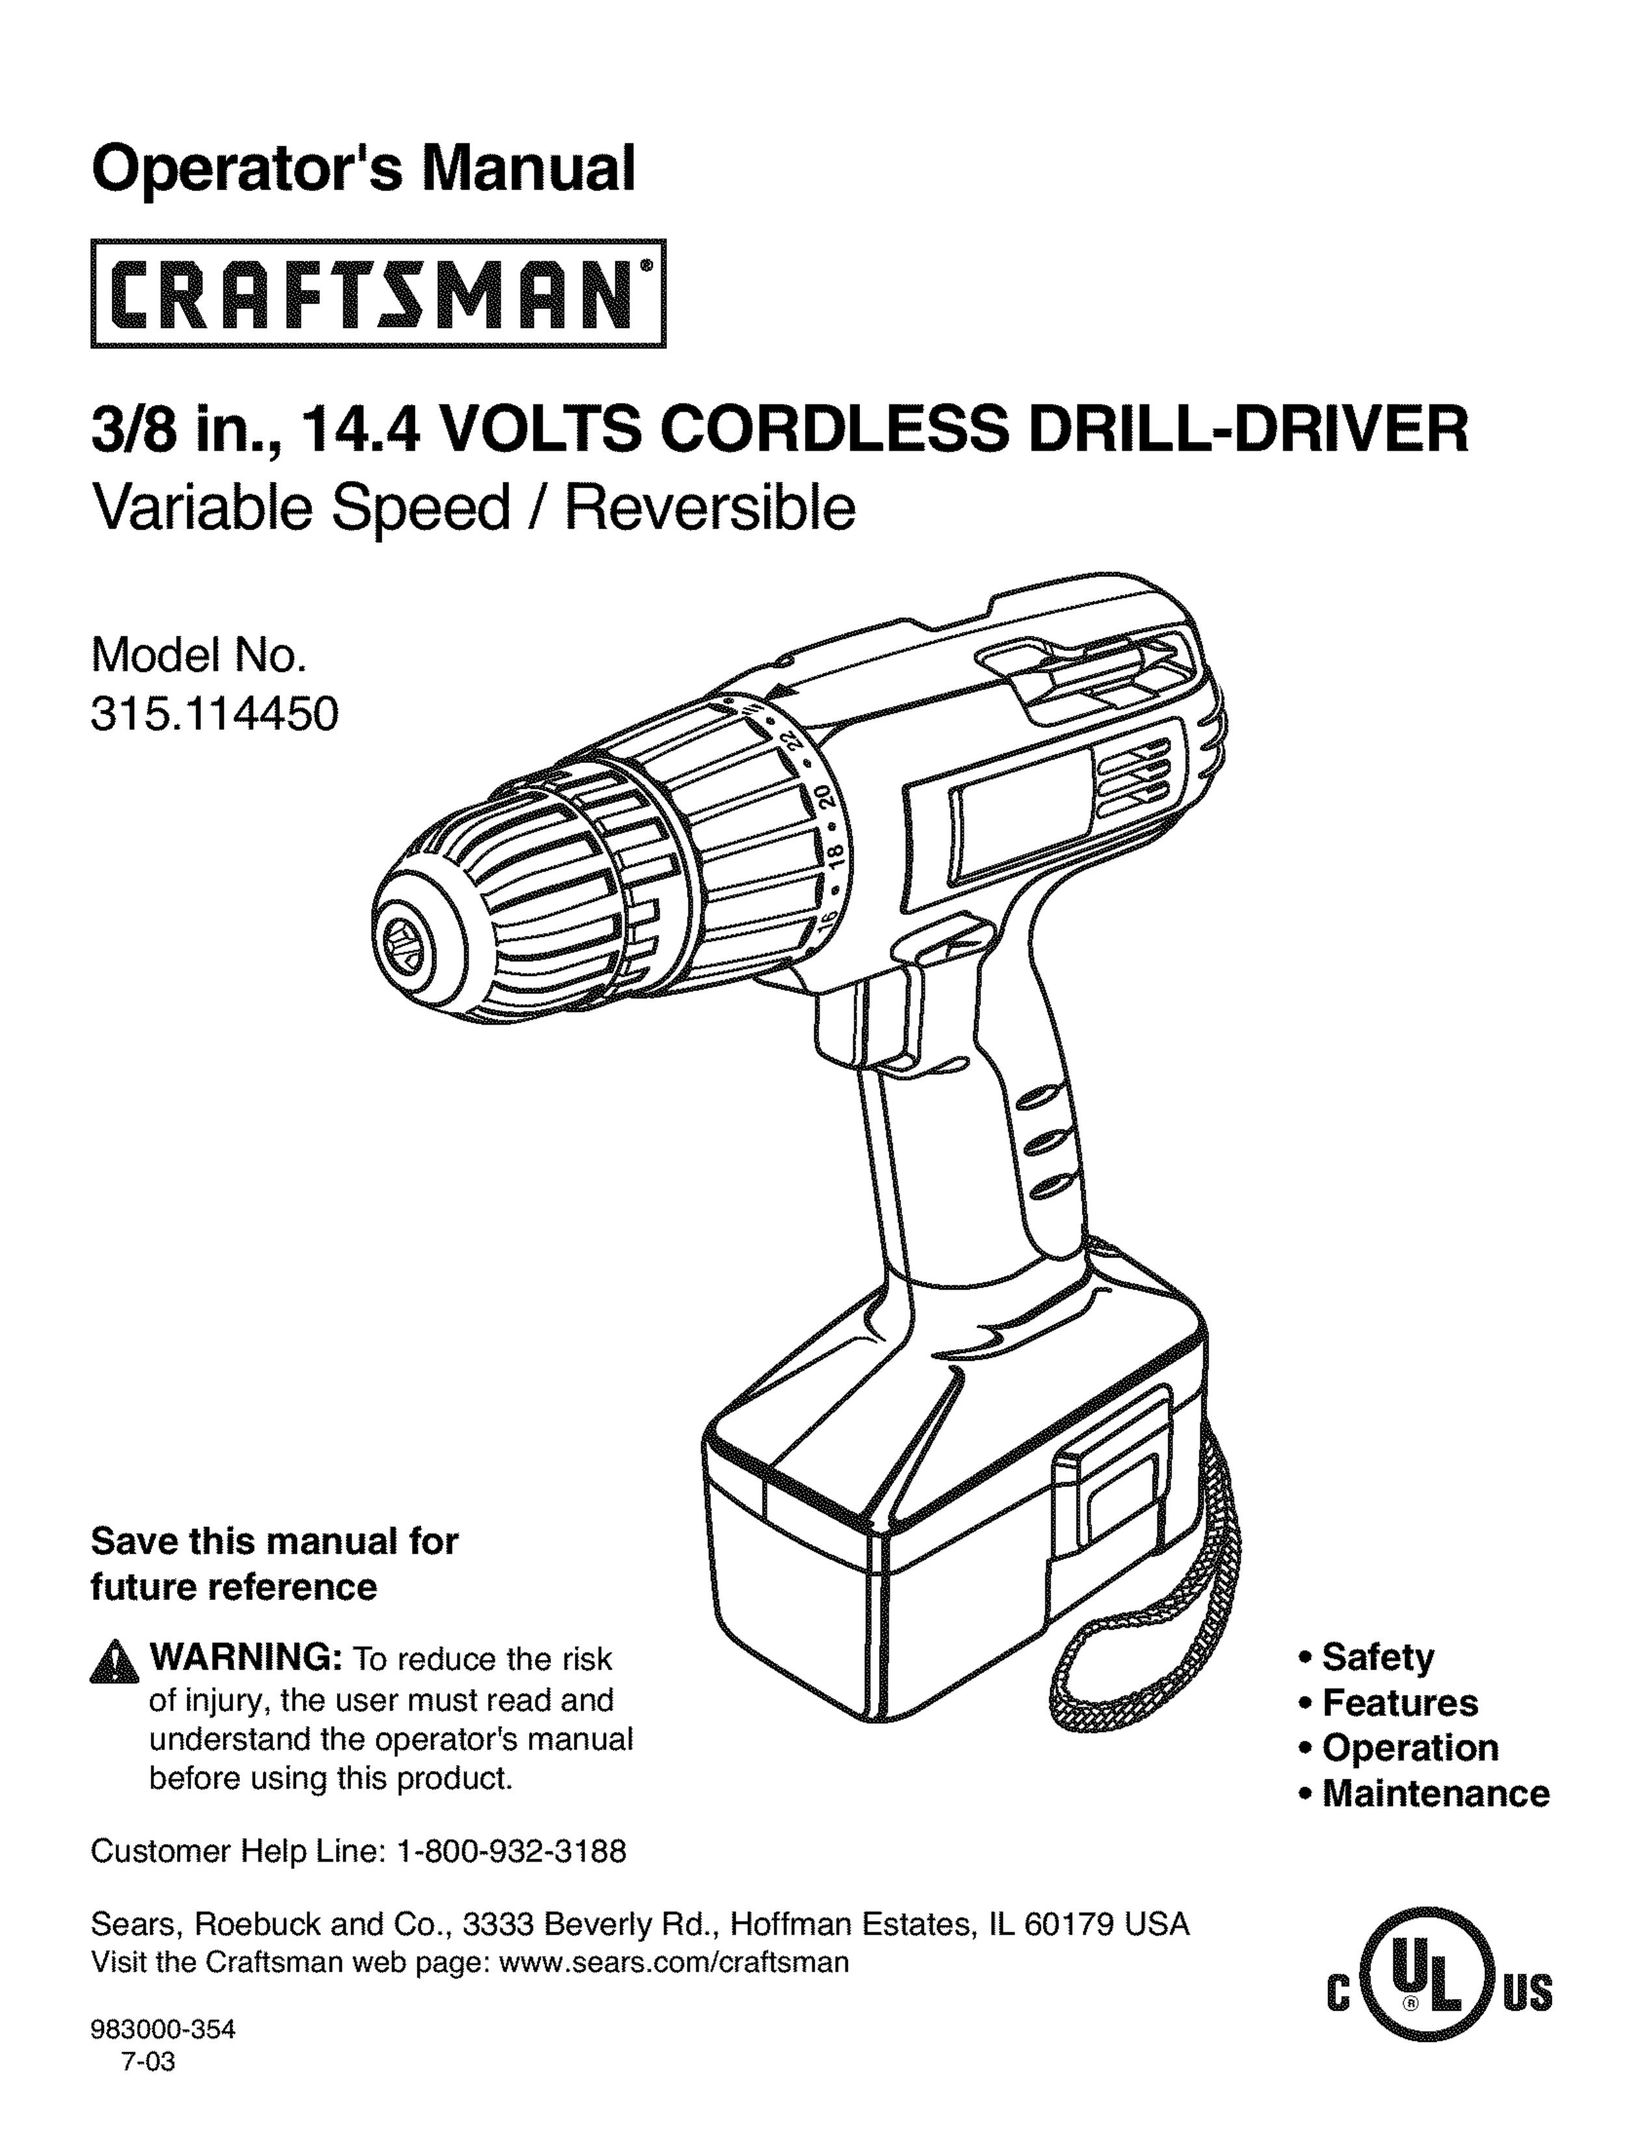 Craftsman 315.11445 Cordless Drill User Manual